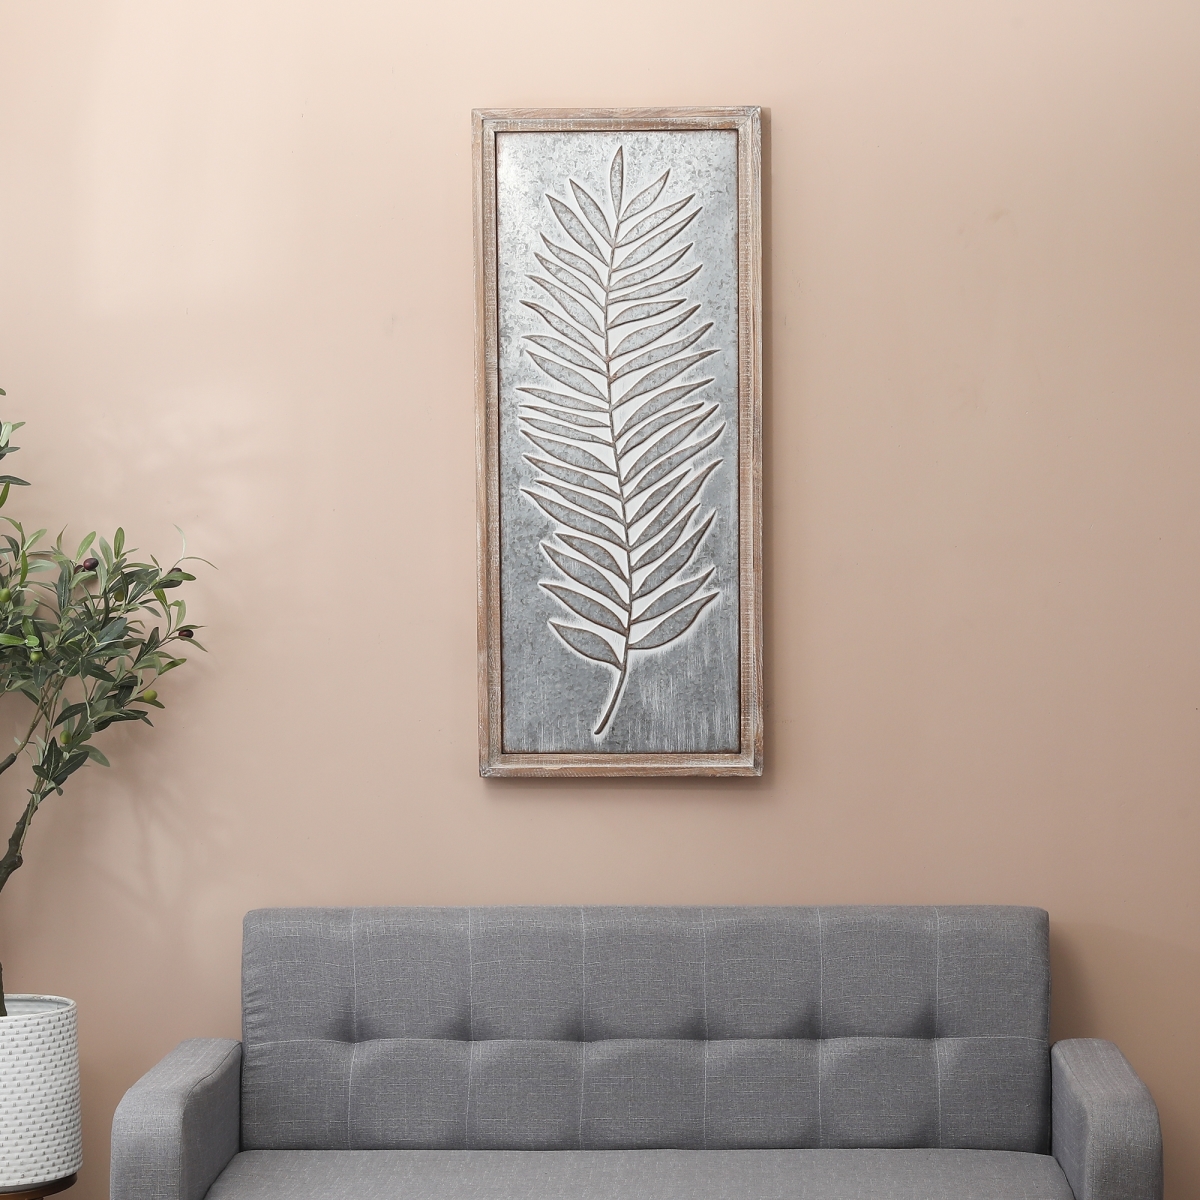 Wha808 Wood Frame Metal Leaf Wall Decor